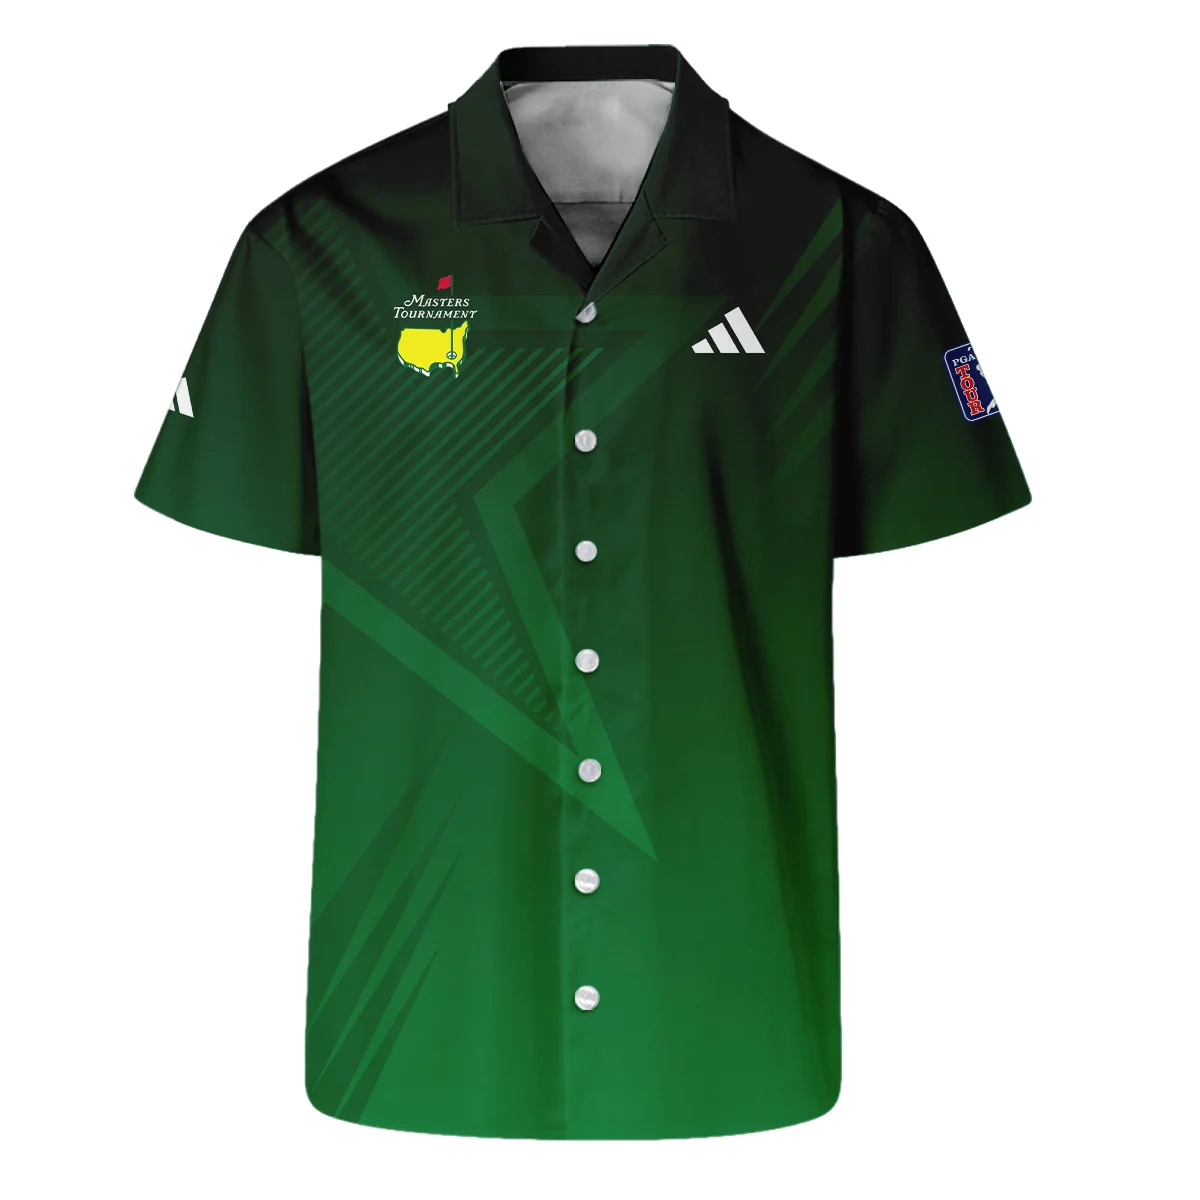 Adidas Masters Tournament Polo Shirt Dark Green Gradient Star Pattern Golf Sports Bomber Jacket Style Classic Bomber Jacket